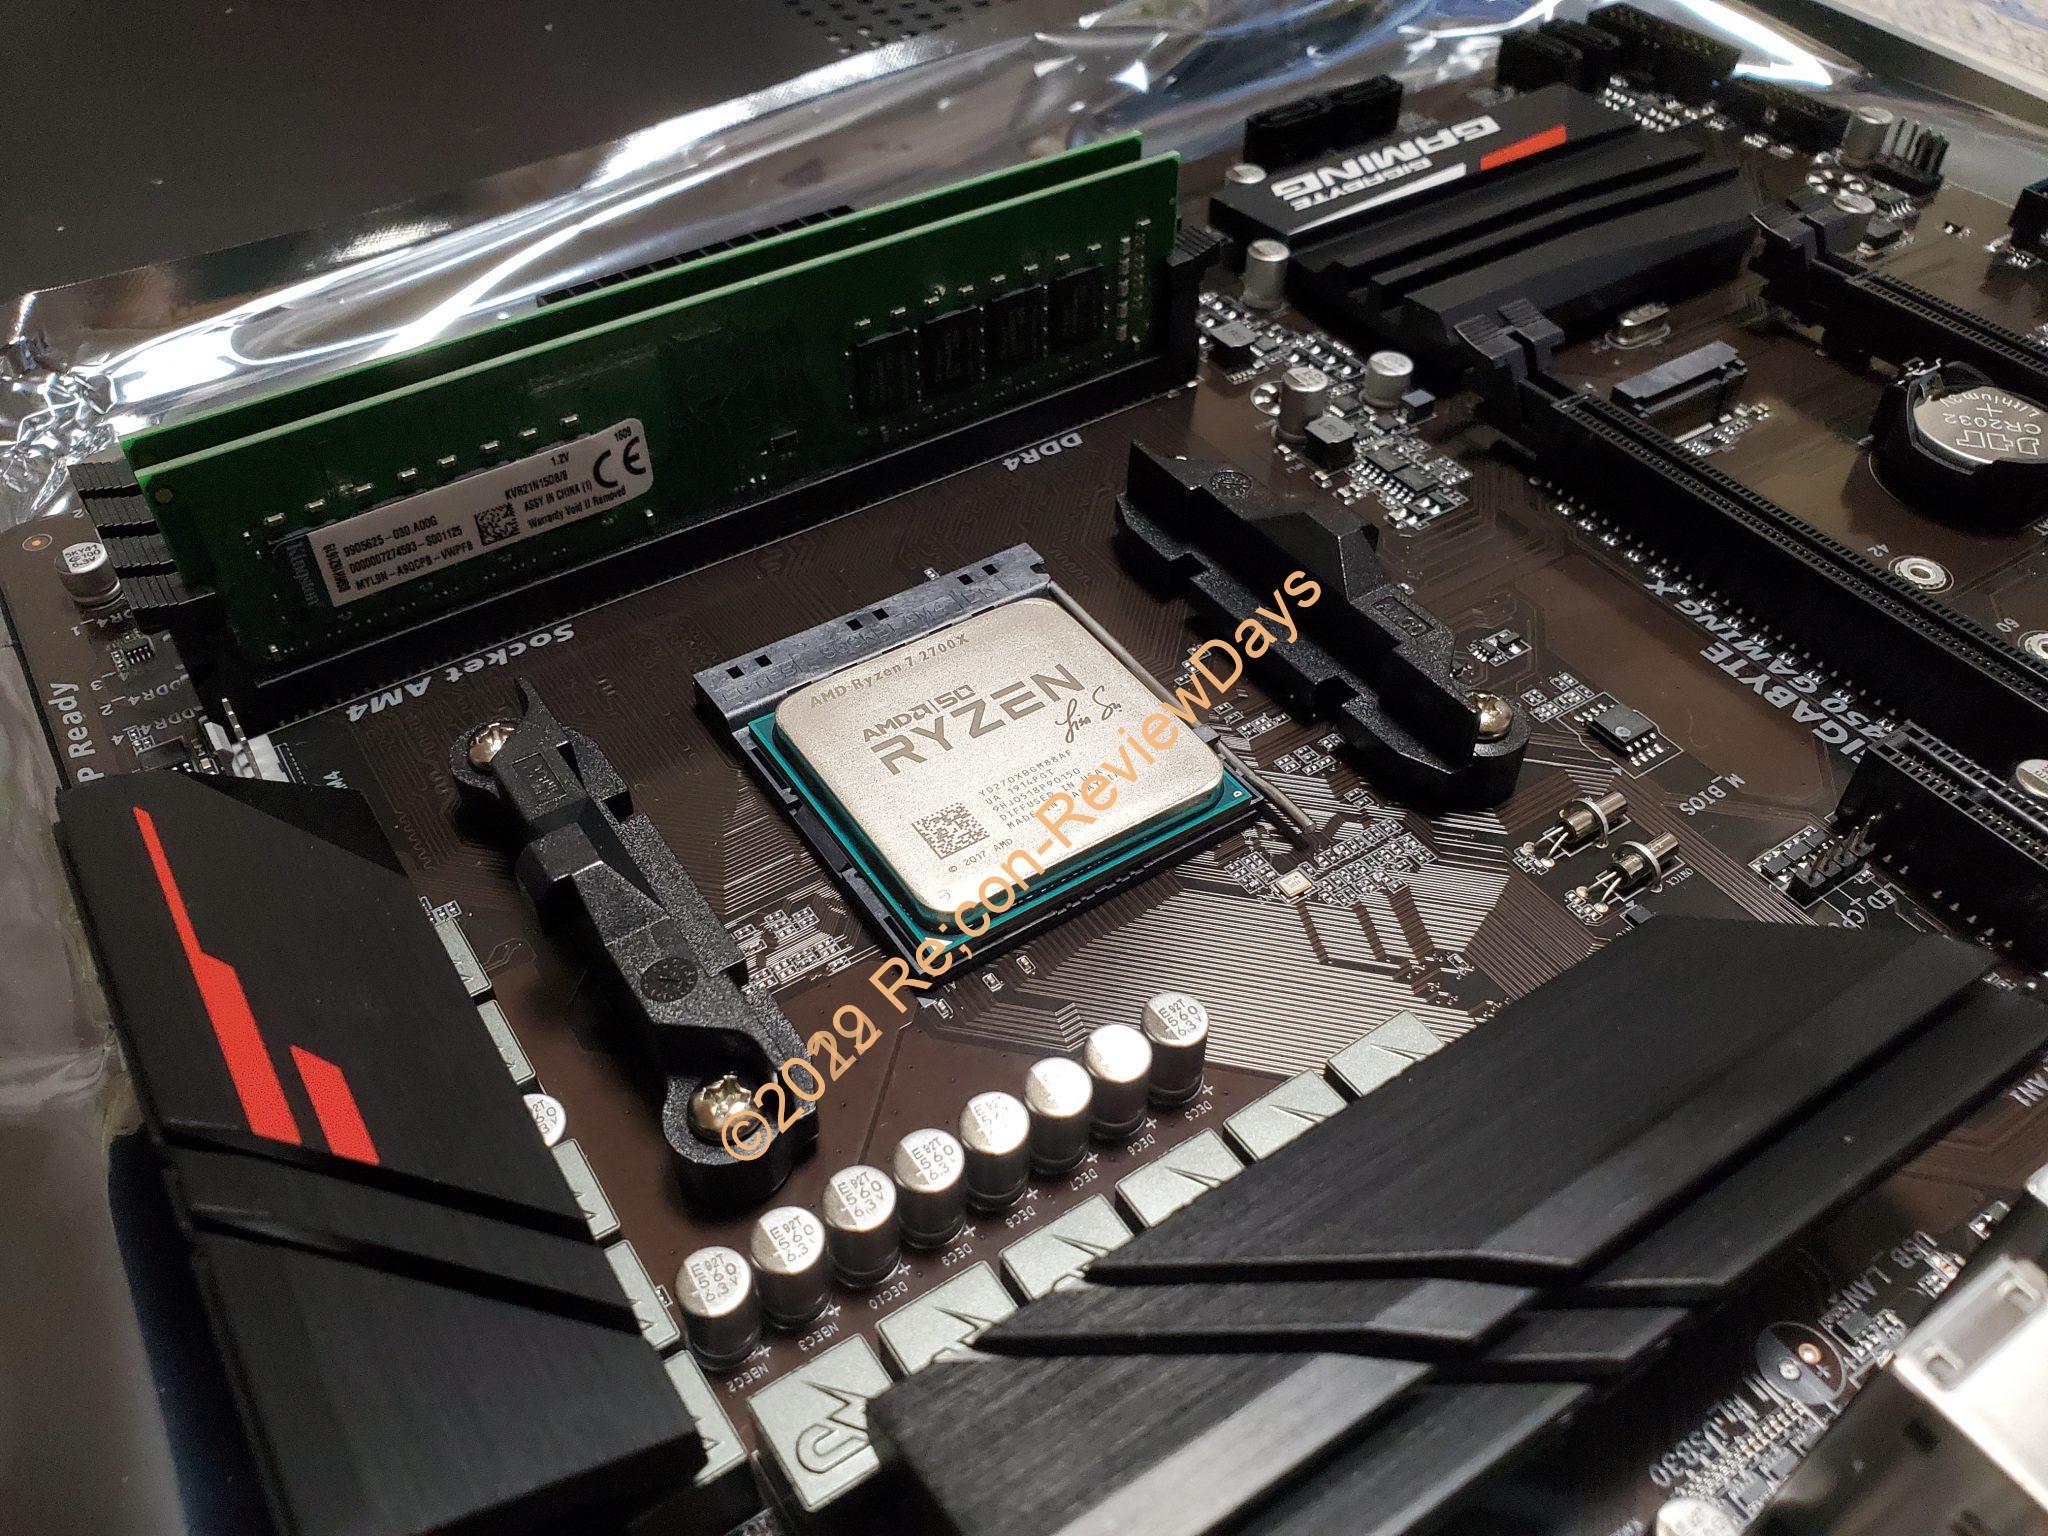 GIGABYTE B450 Gaming XでUSB周りの不具合が発生したためBIOSをF30からF31に上げると改善 #GIGABYTE #AMD #B450 #マザーボード